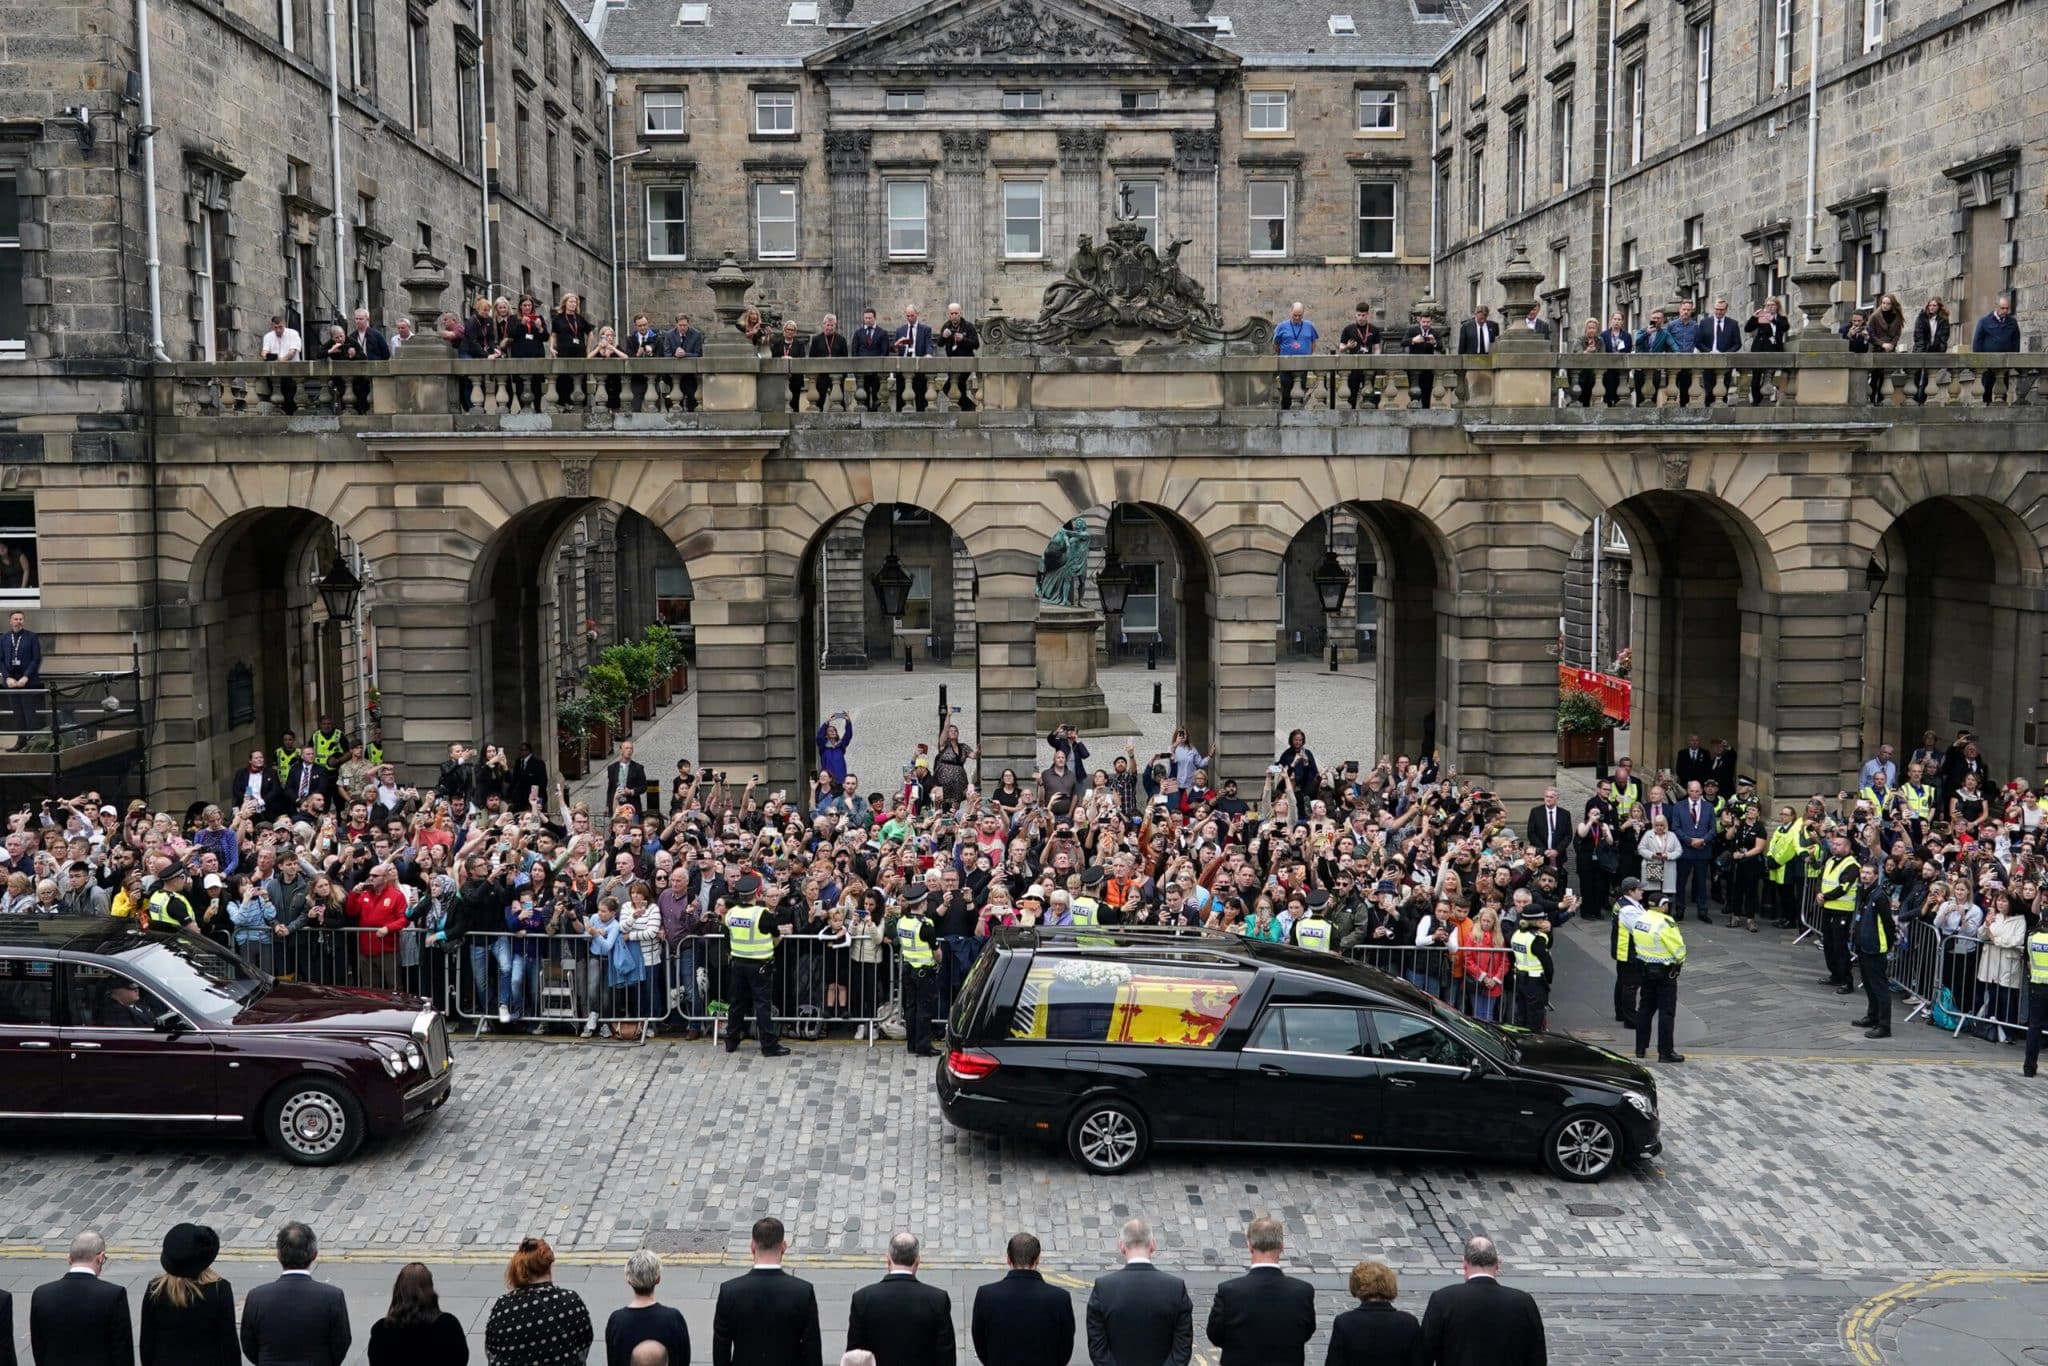 Elizabeth's coffin arrives in Edinburgh as mourners line streets